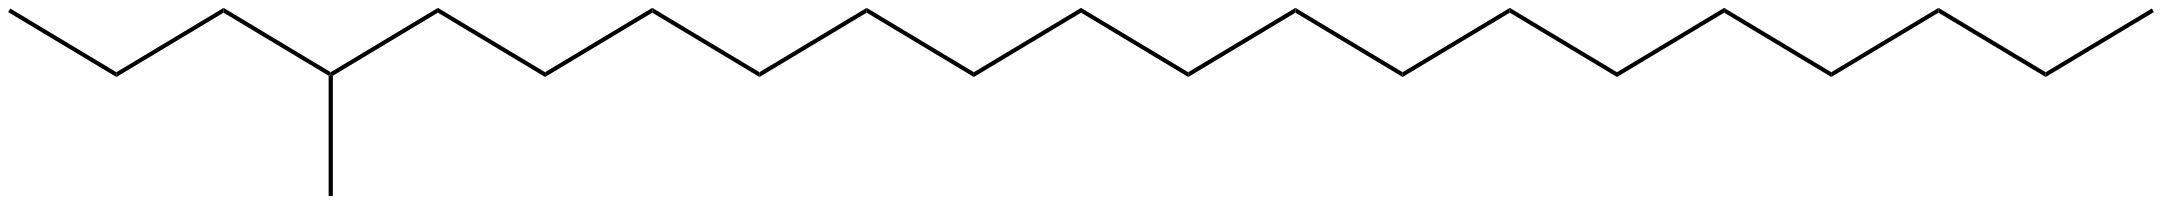 Image of heneicosane, 4-methyl-